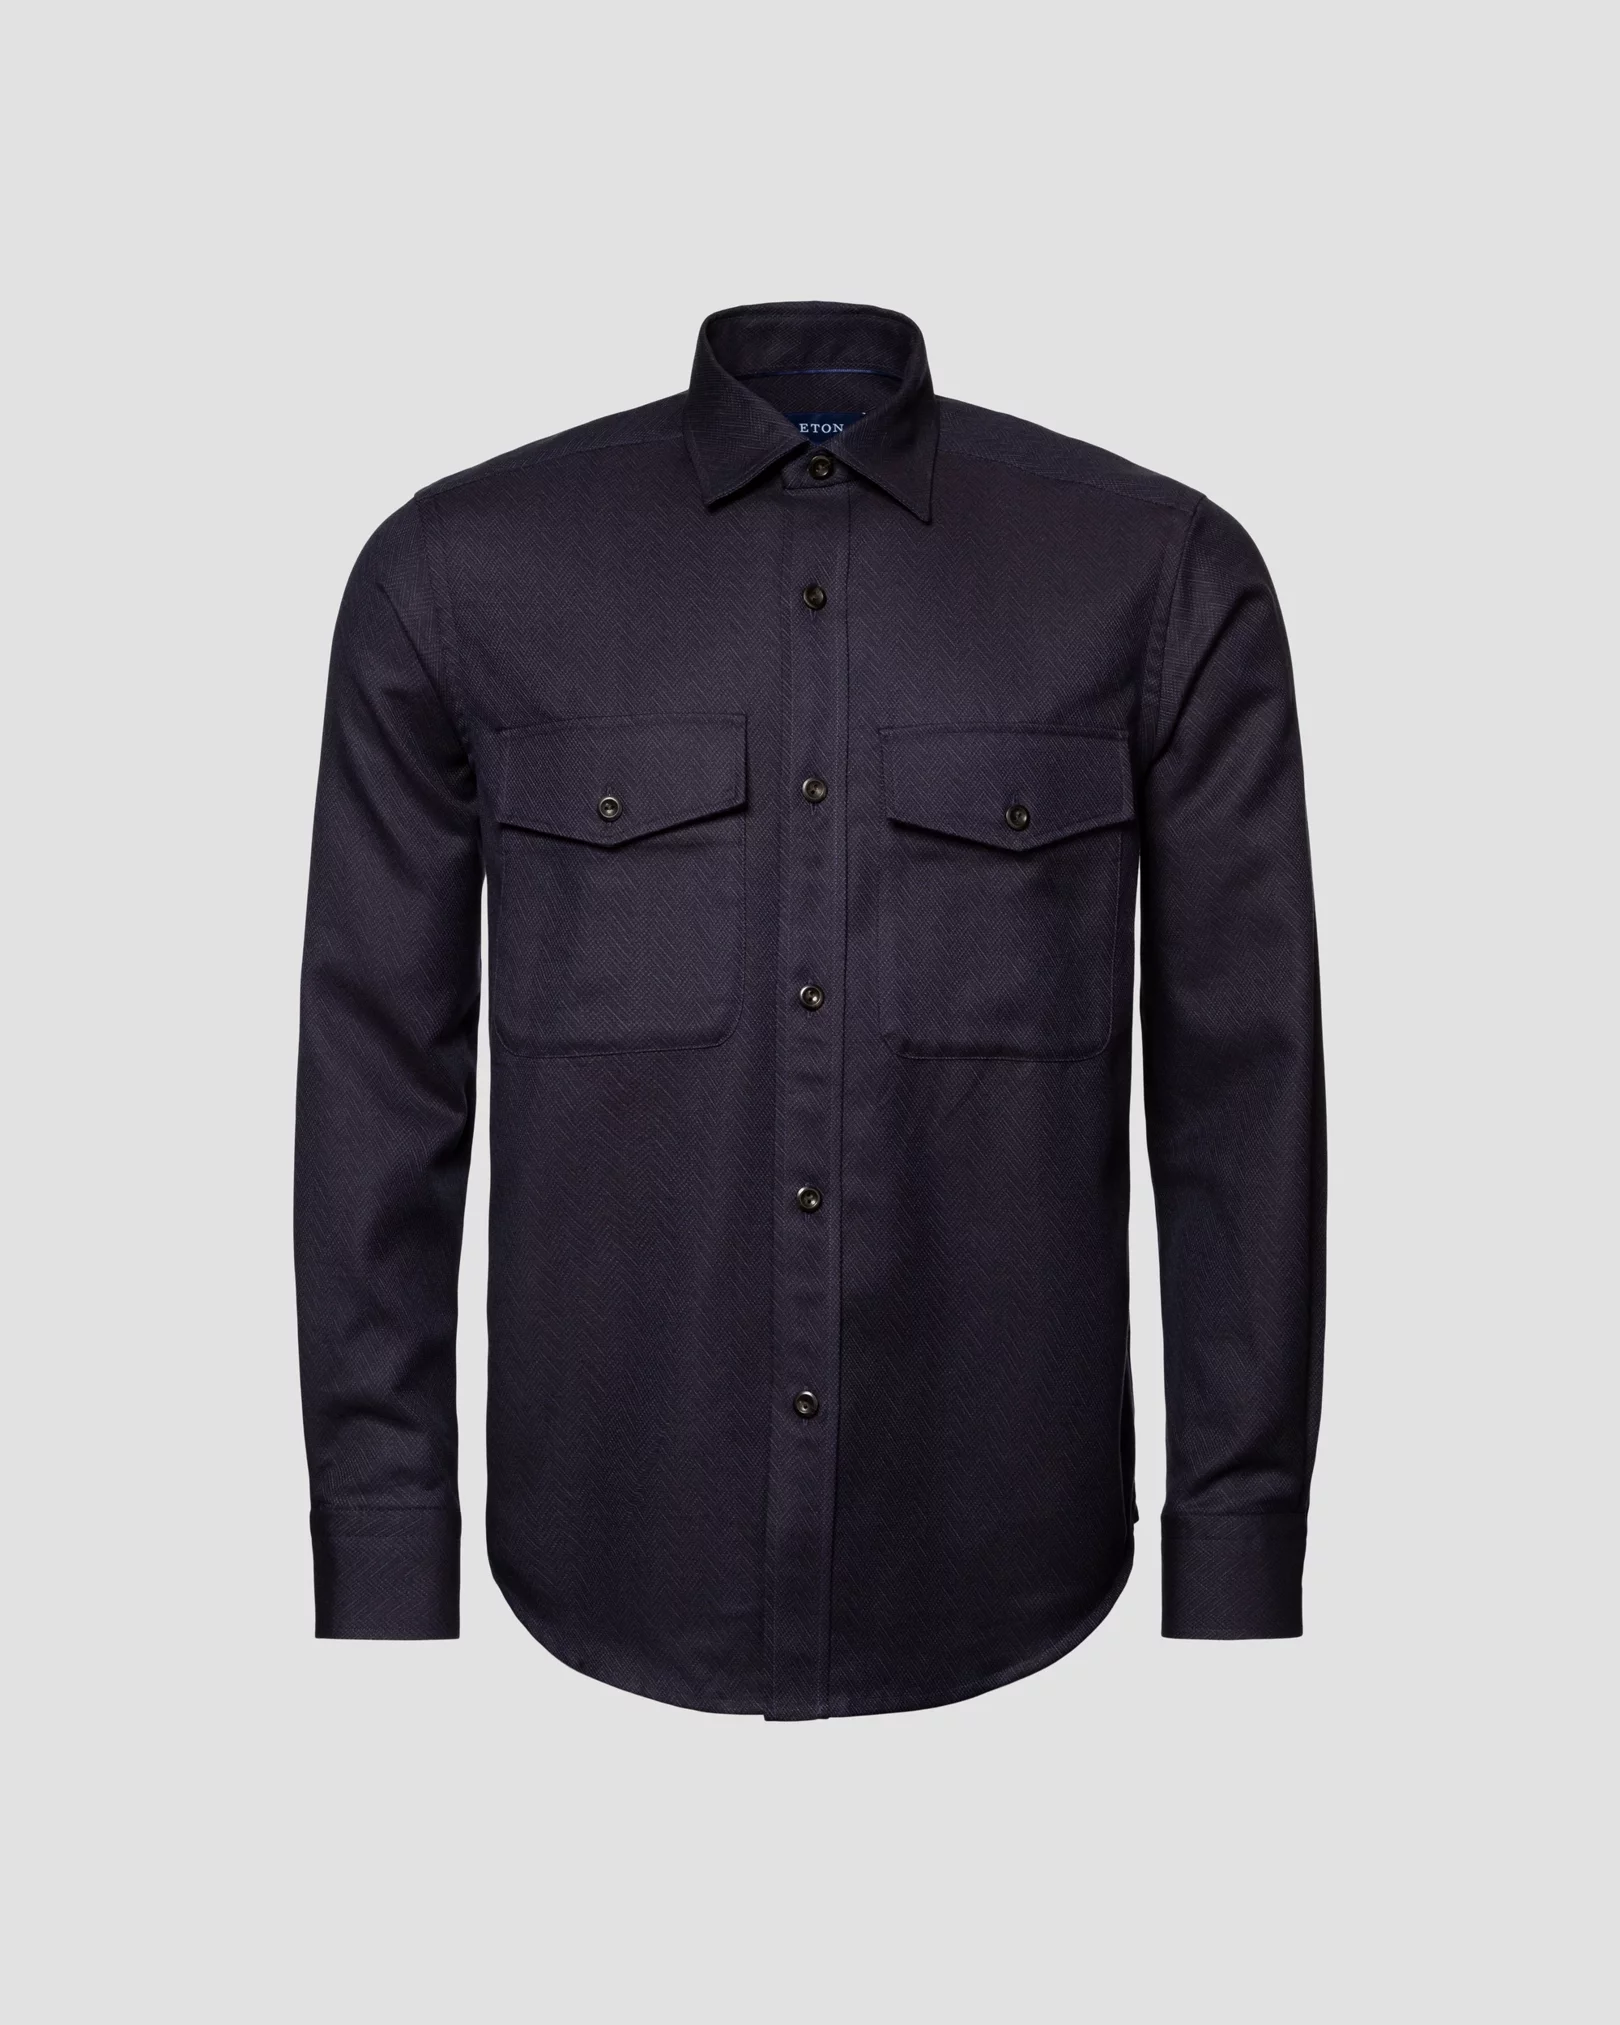 Eton - navy blue dobby overshirt